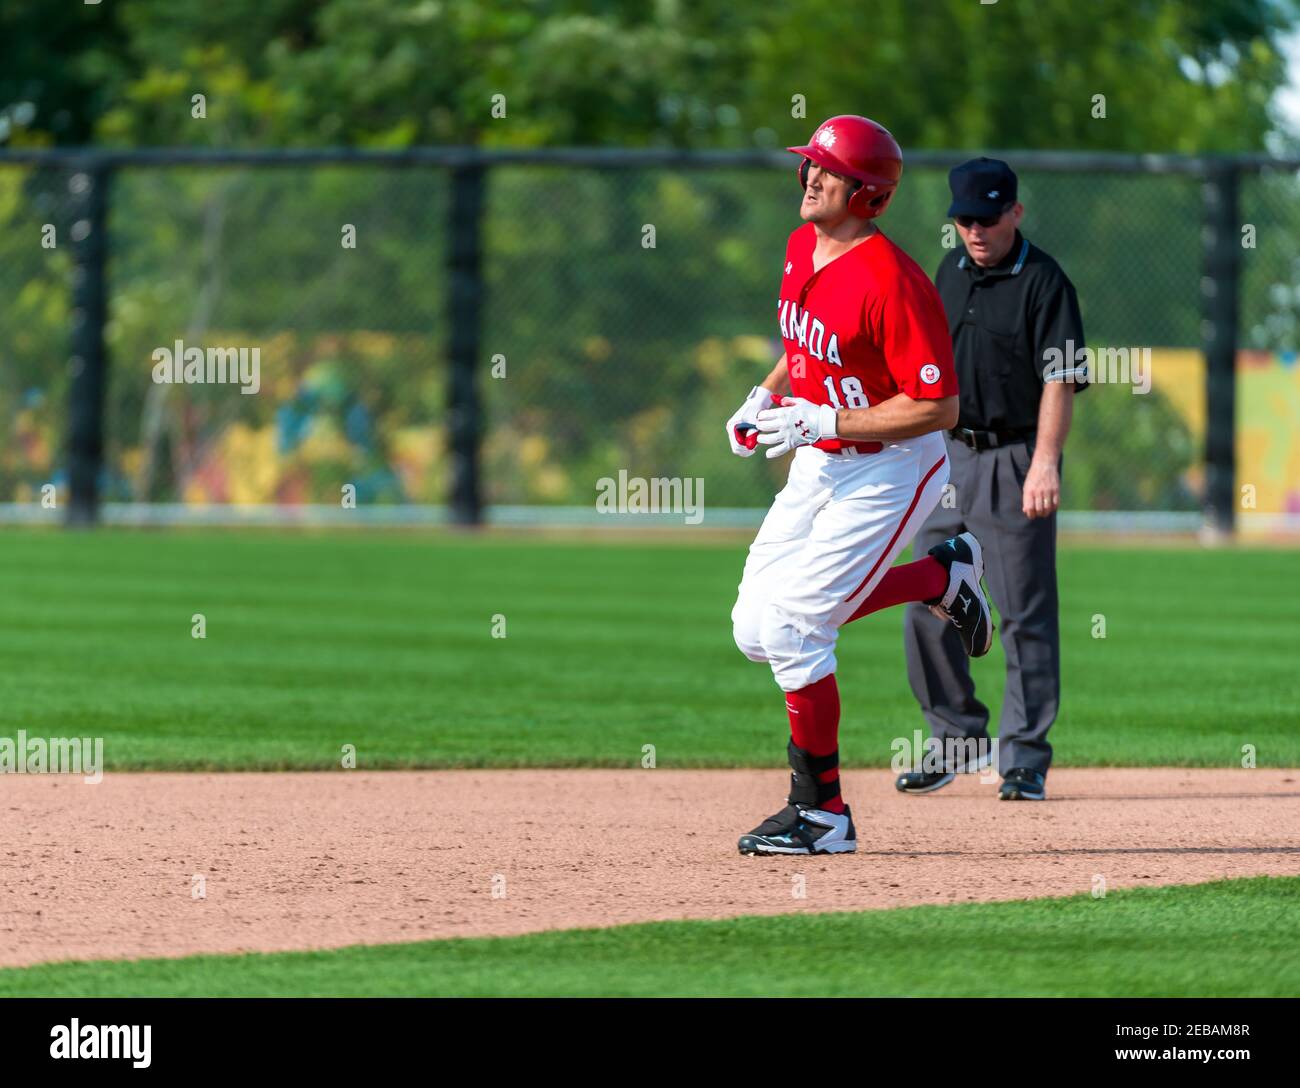 Toronto Pan American Games 2015, Baseball tournament: Pinch hitter Brock Kjeldgaard substitutes Jordan Lennerton and bats a home run in the bottom of Stock Photo